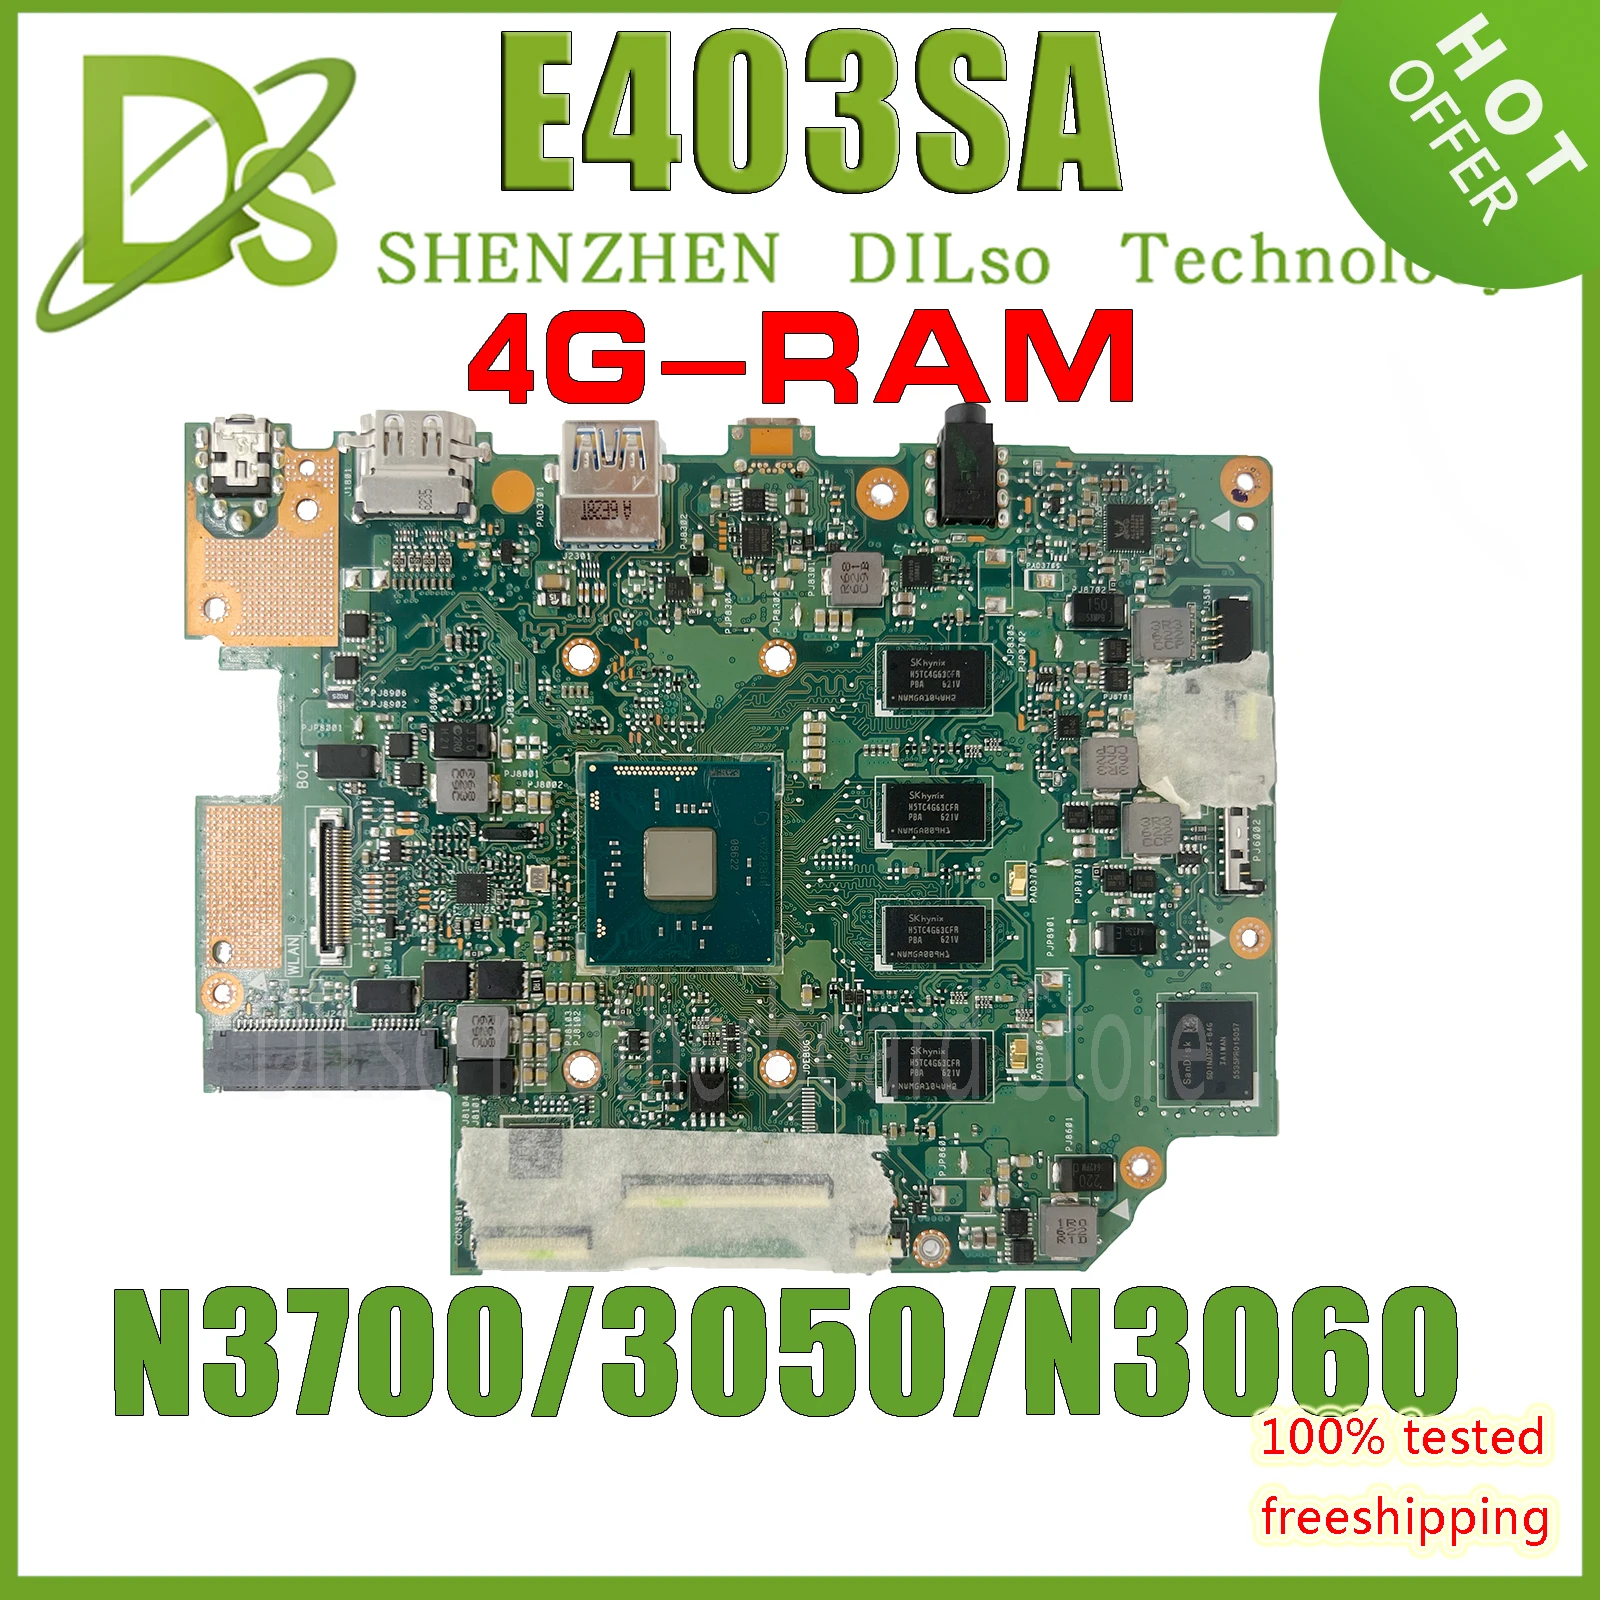 

KEFU E403SA Laptop Motherboard For ASUS VIVOBook Placa E403SA Mainboard E403S E403 With N3050/N3060 N3700/N3710 100% Test OK